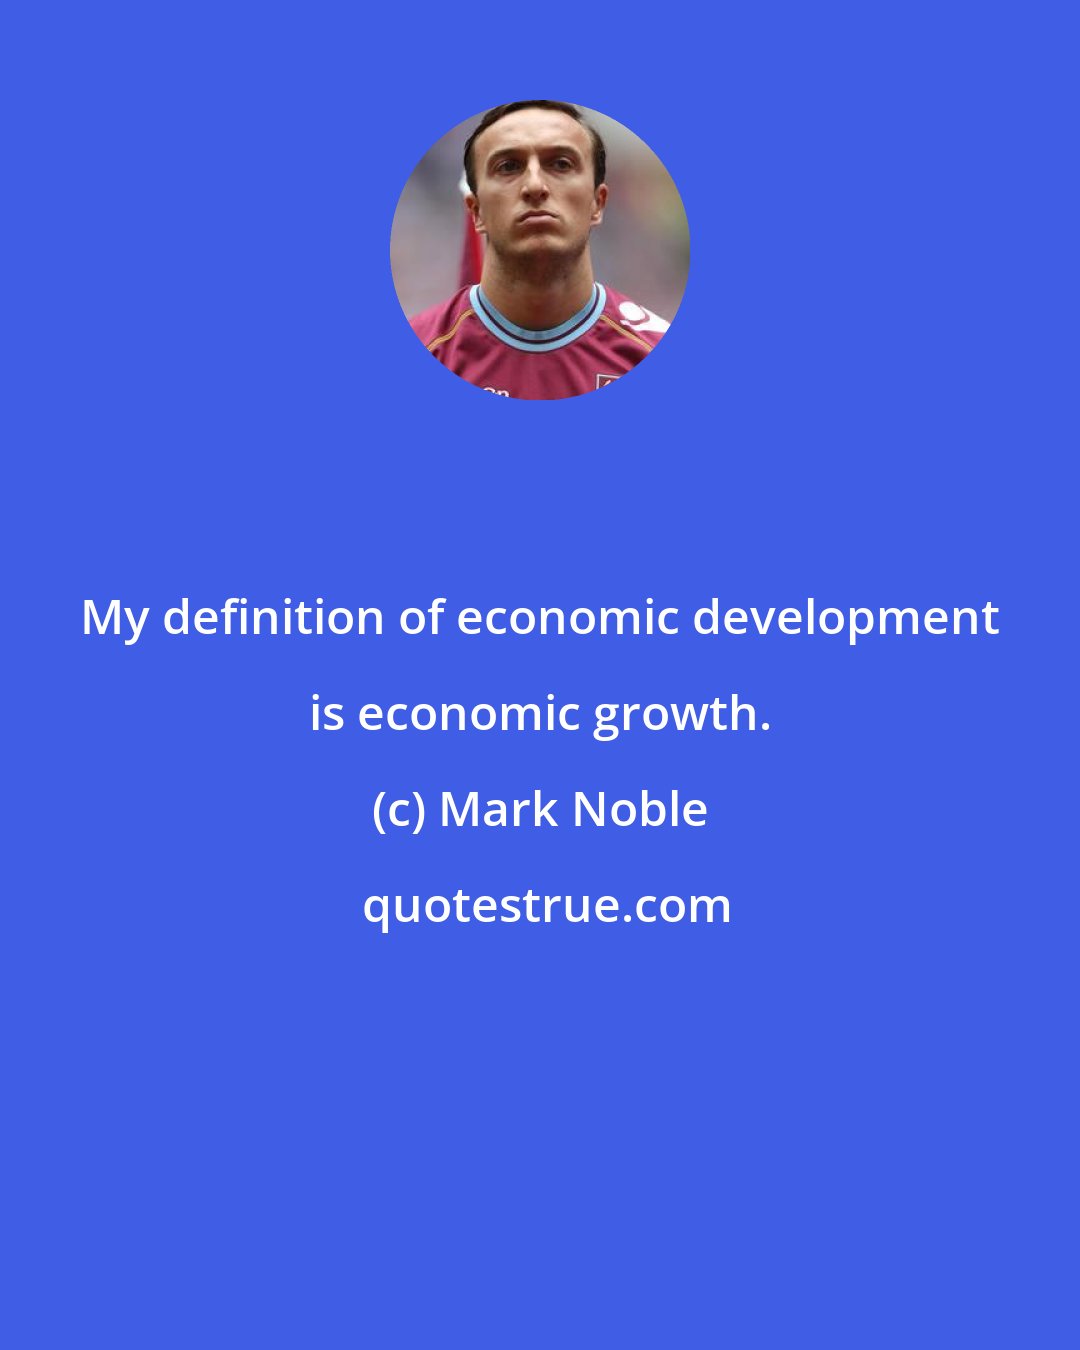 Mark Noble: My definition of economic development is economic growth.